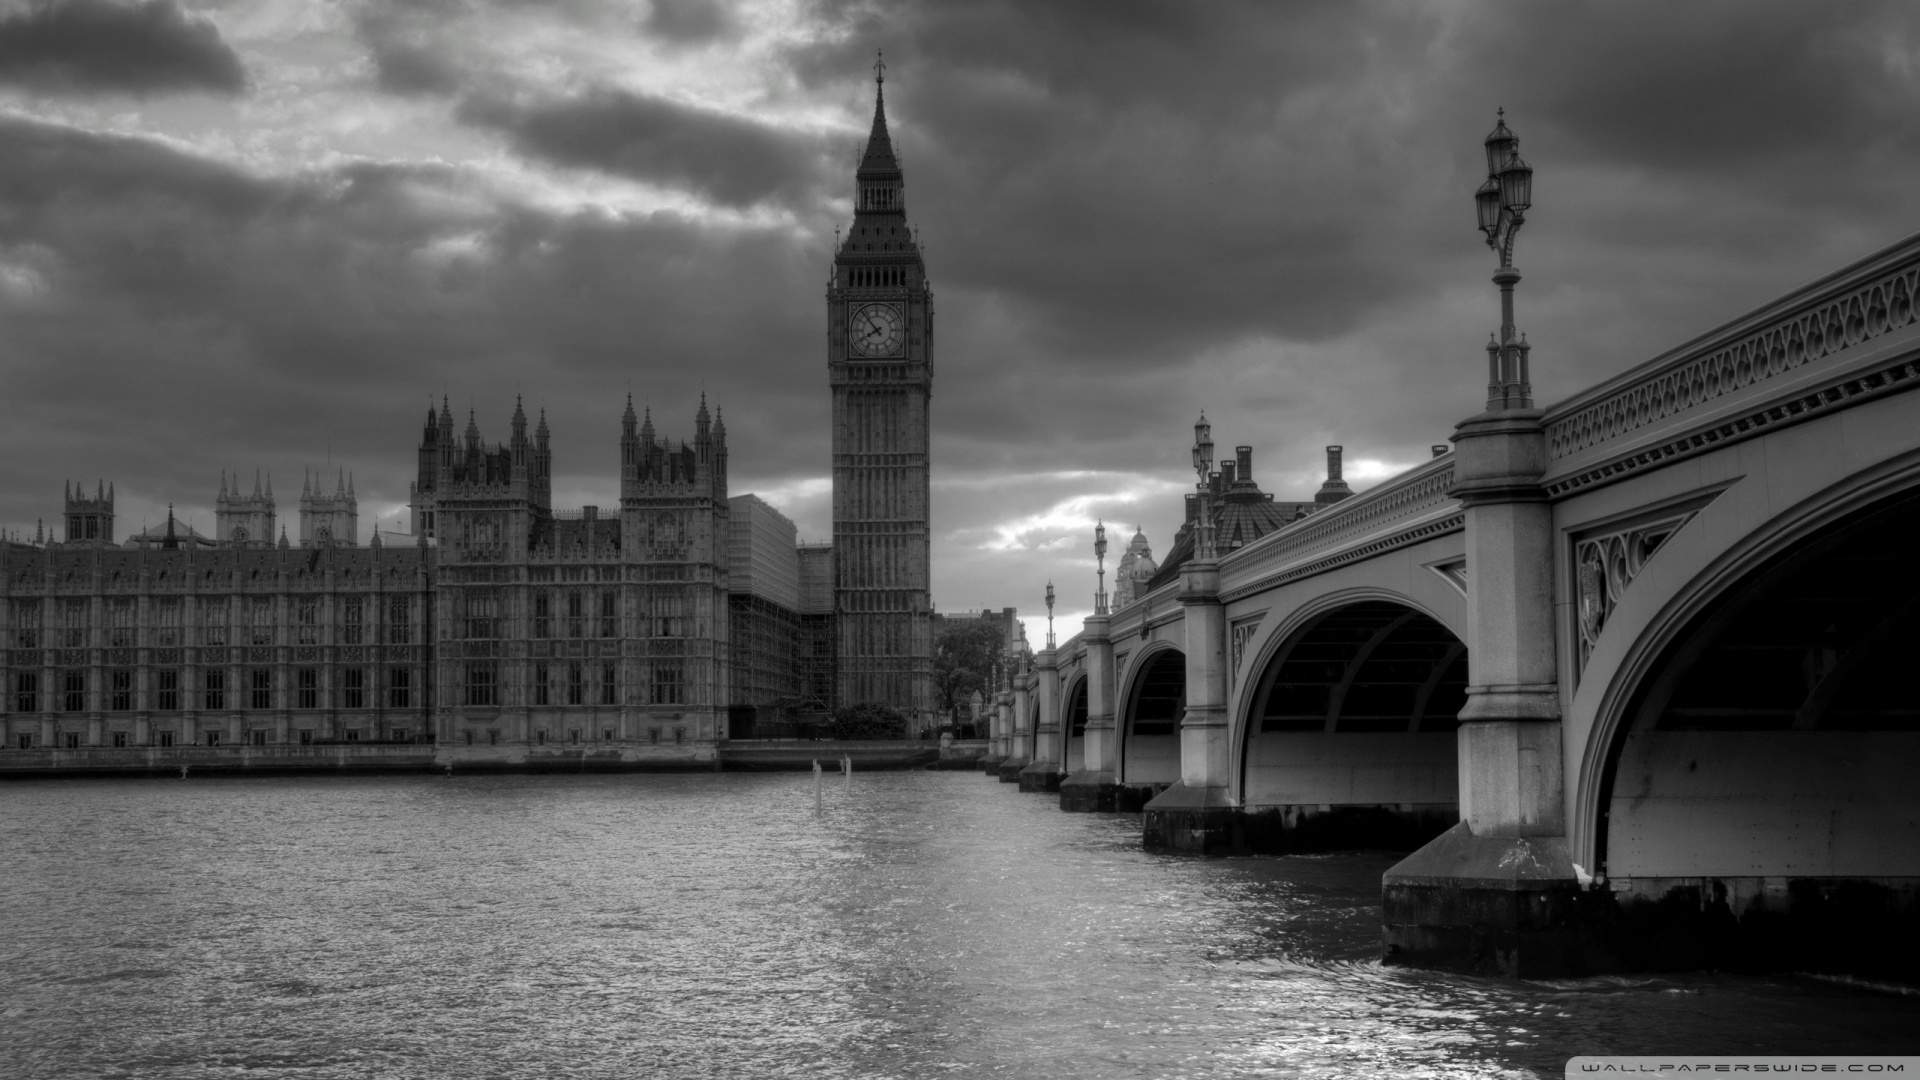 Download London In Black And White Wallpaper 1920x1080 | Wallpoper ...